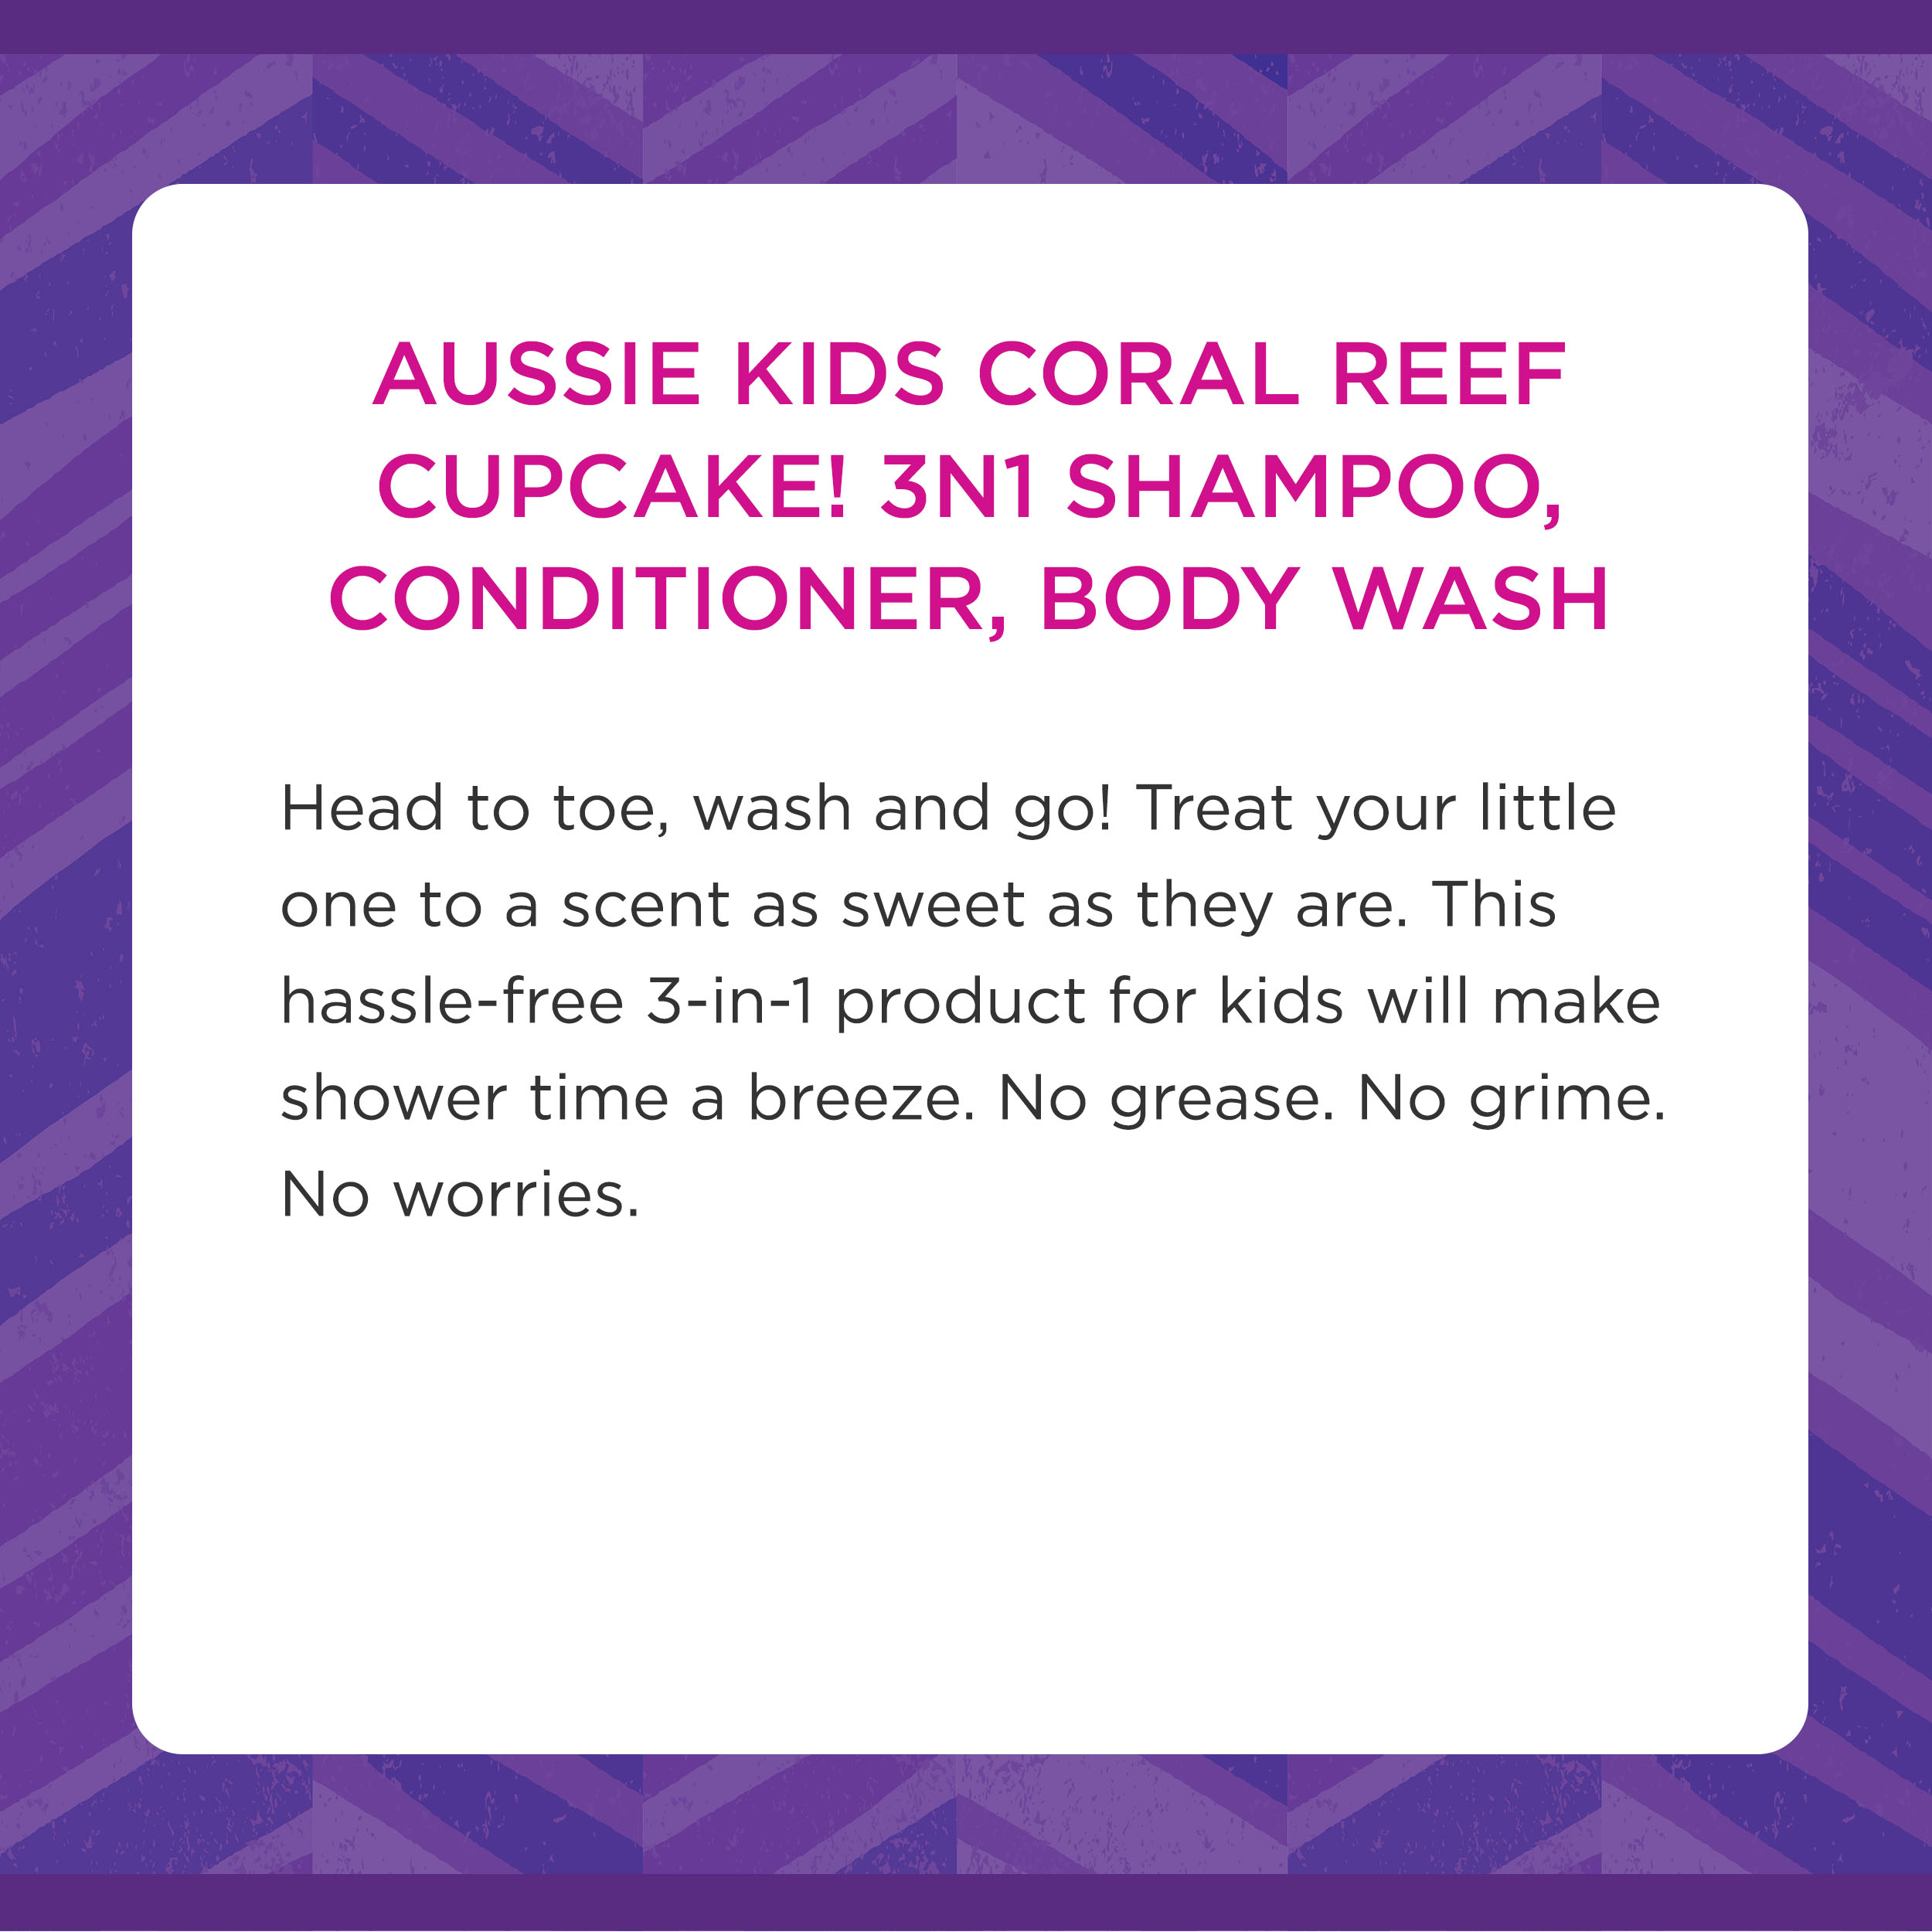 Aussie Kids Coral Reef 3in1 Shampoo, Conditioner, Body Wash, 26.2 oz - image 4 of 6